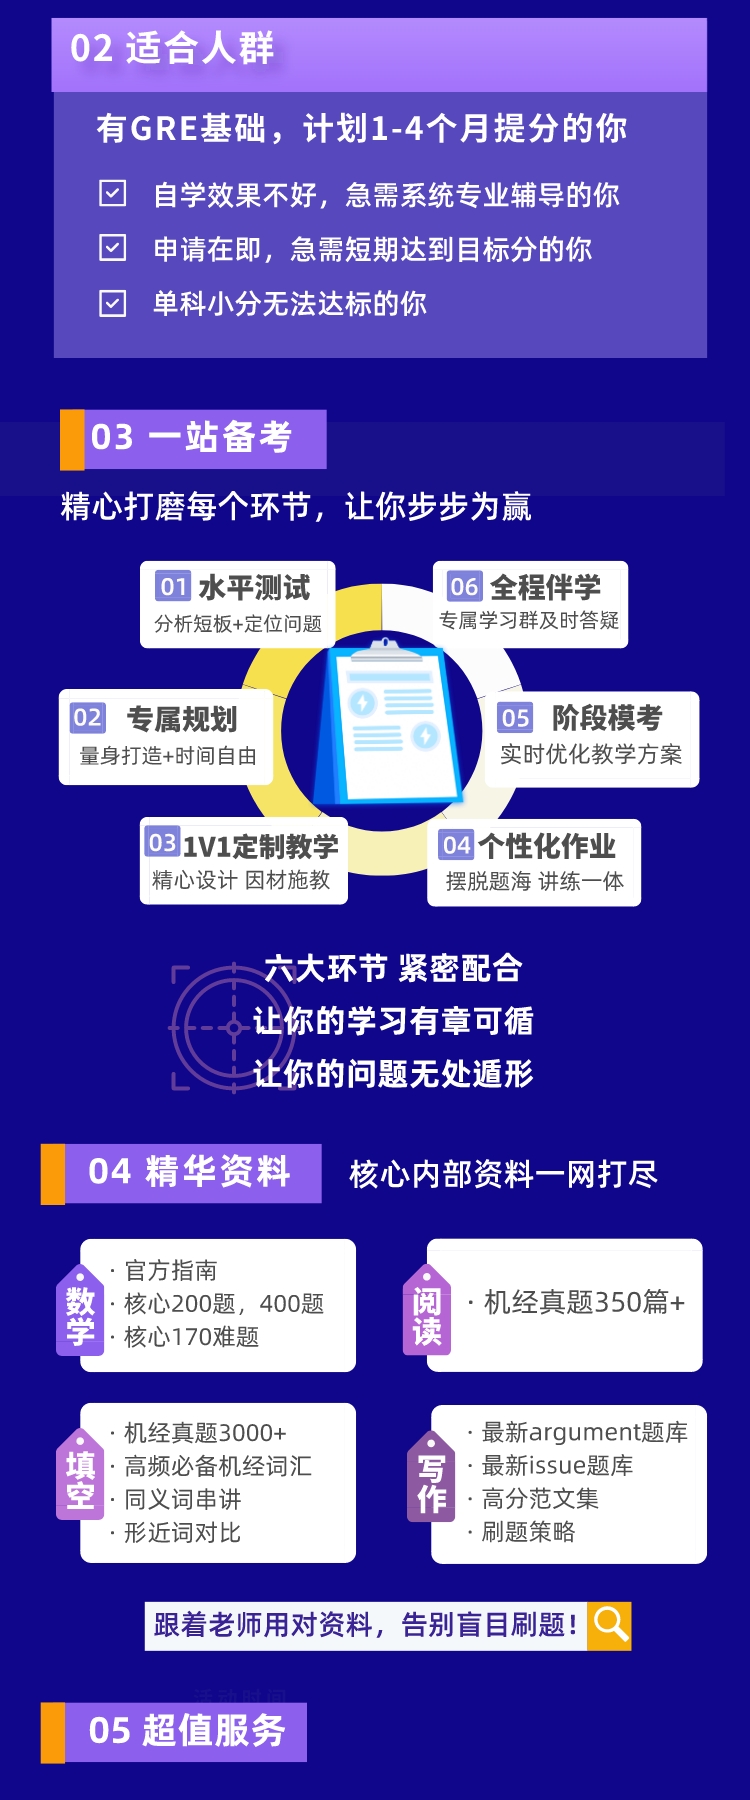 https://simg01.gaodunwangxiao.com/uploadfiles/product-center/202303/27/9c7f1_20230327153608.jpeg